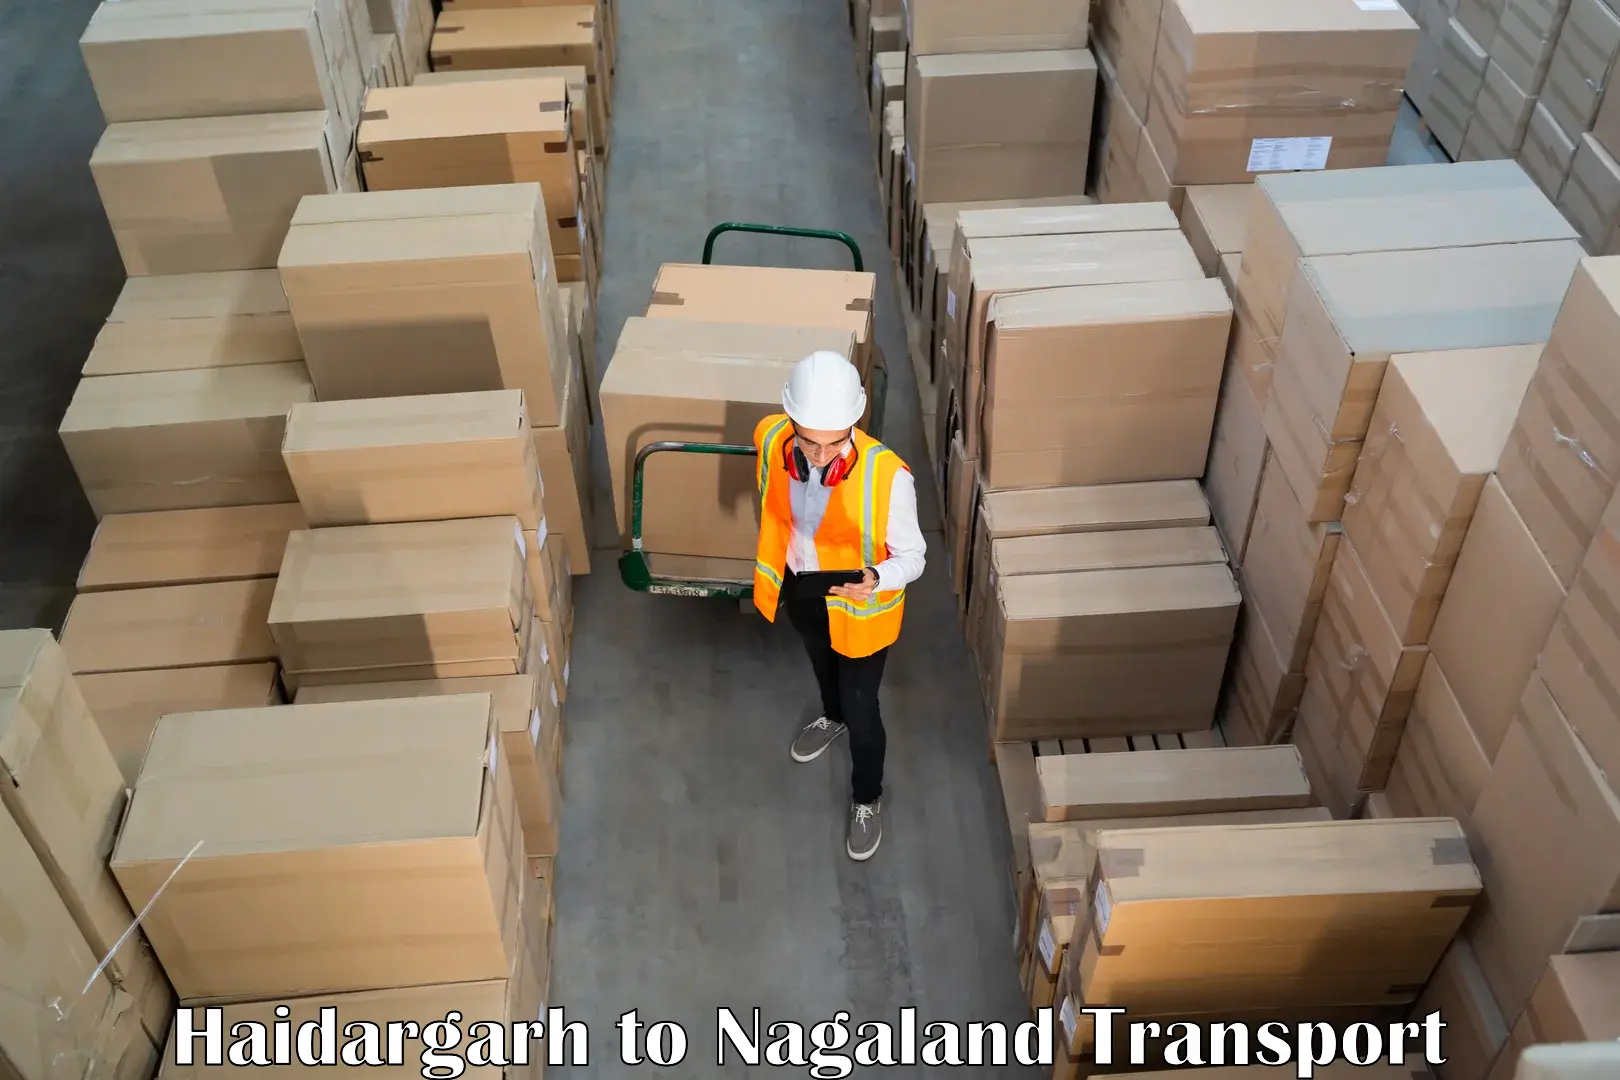 Two wheeler parcel service Haidargarh to Nagaland